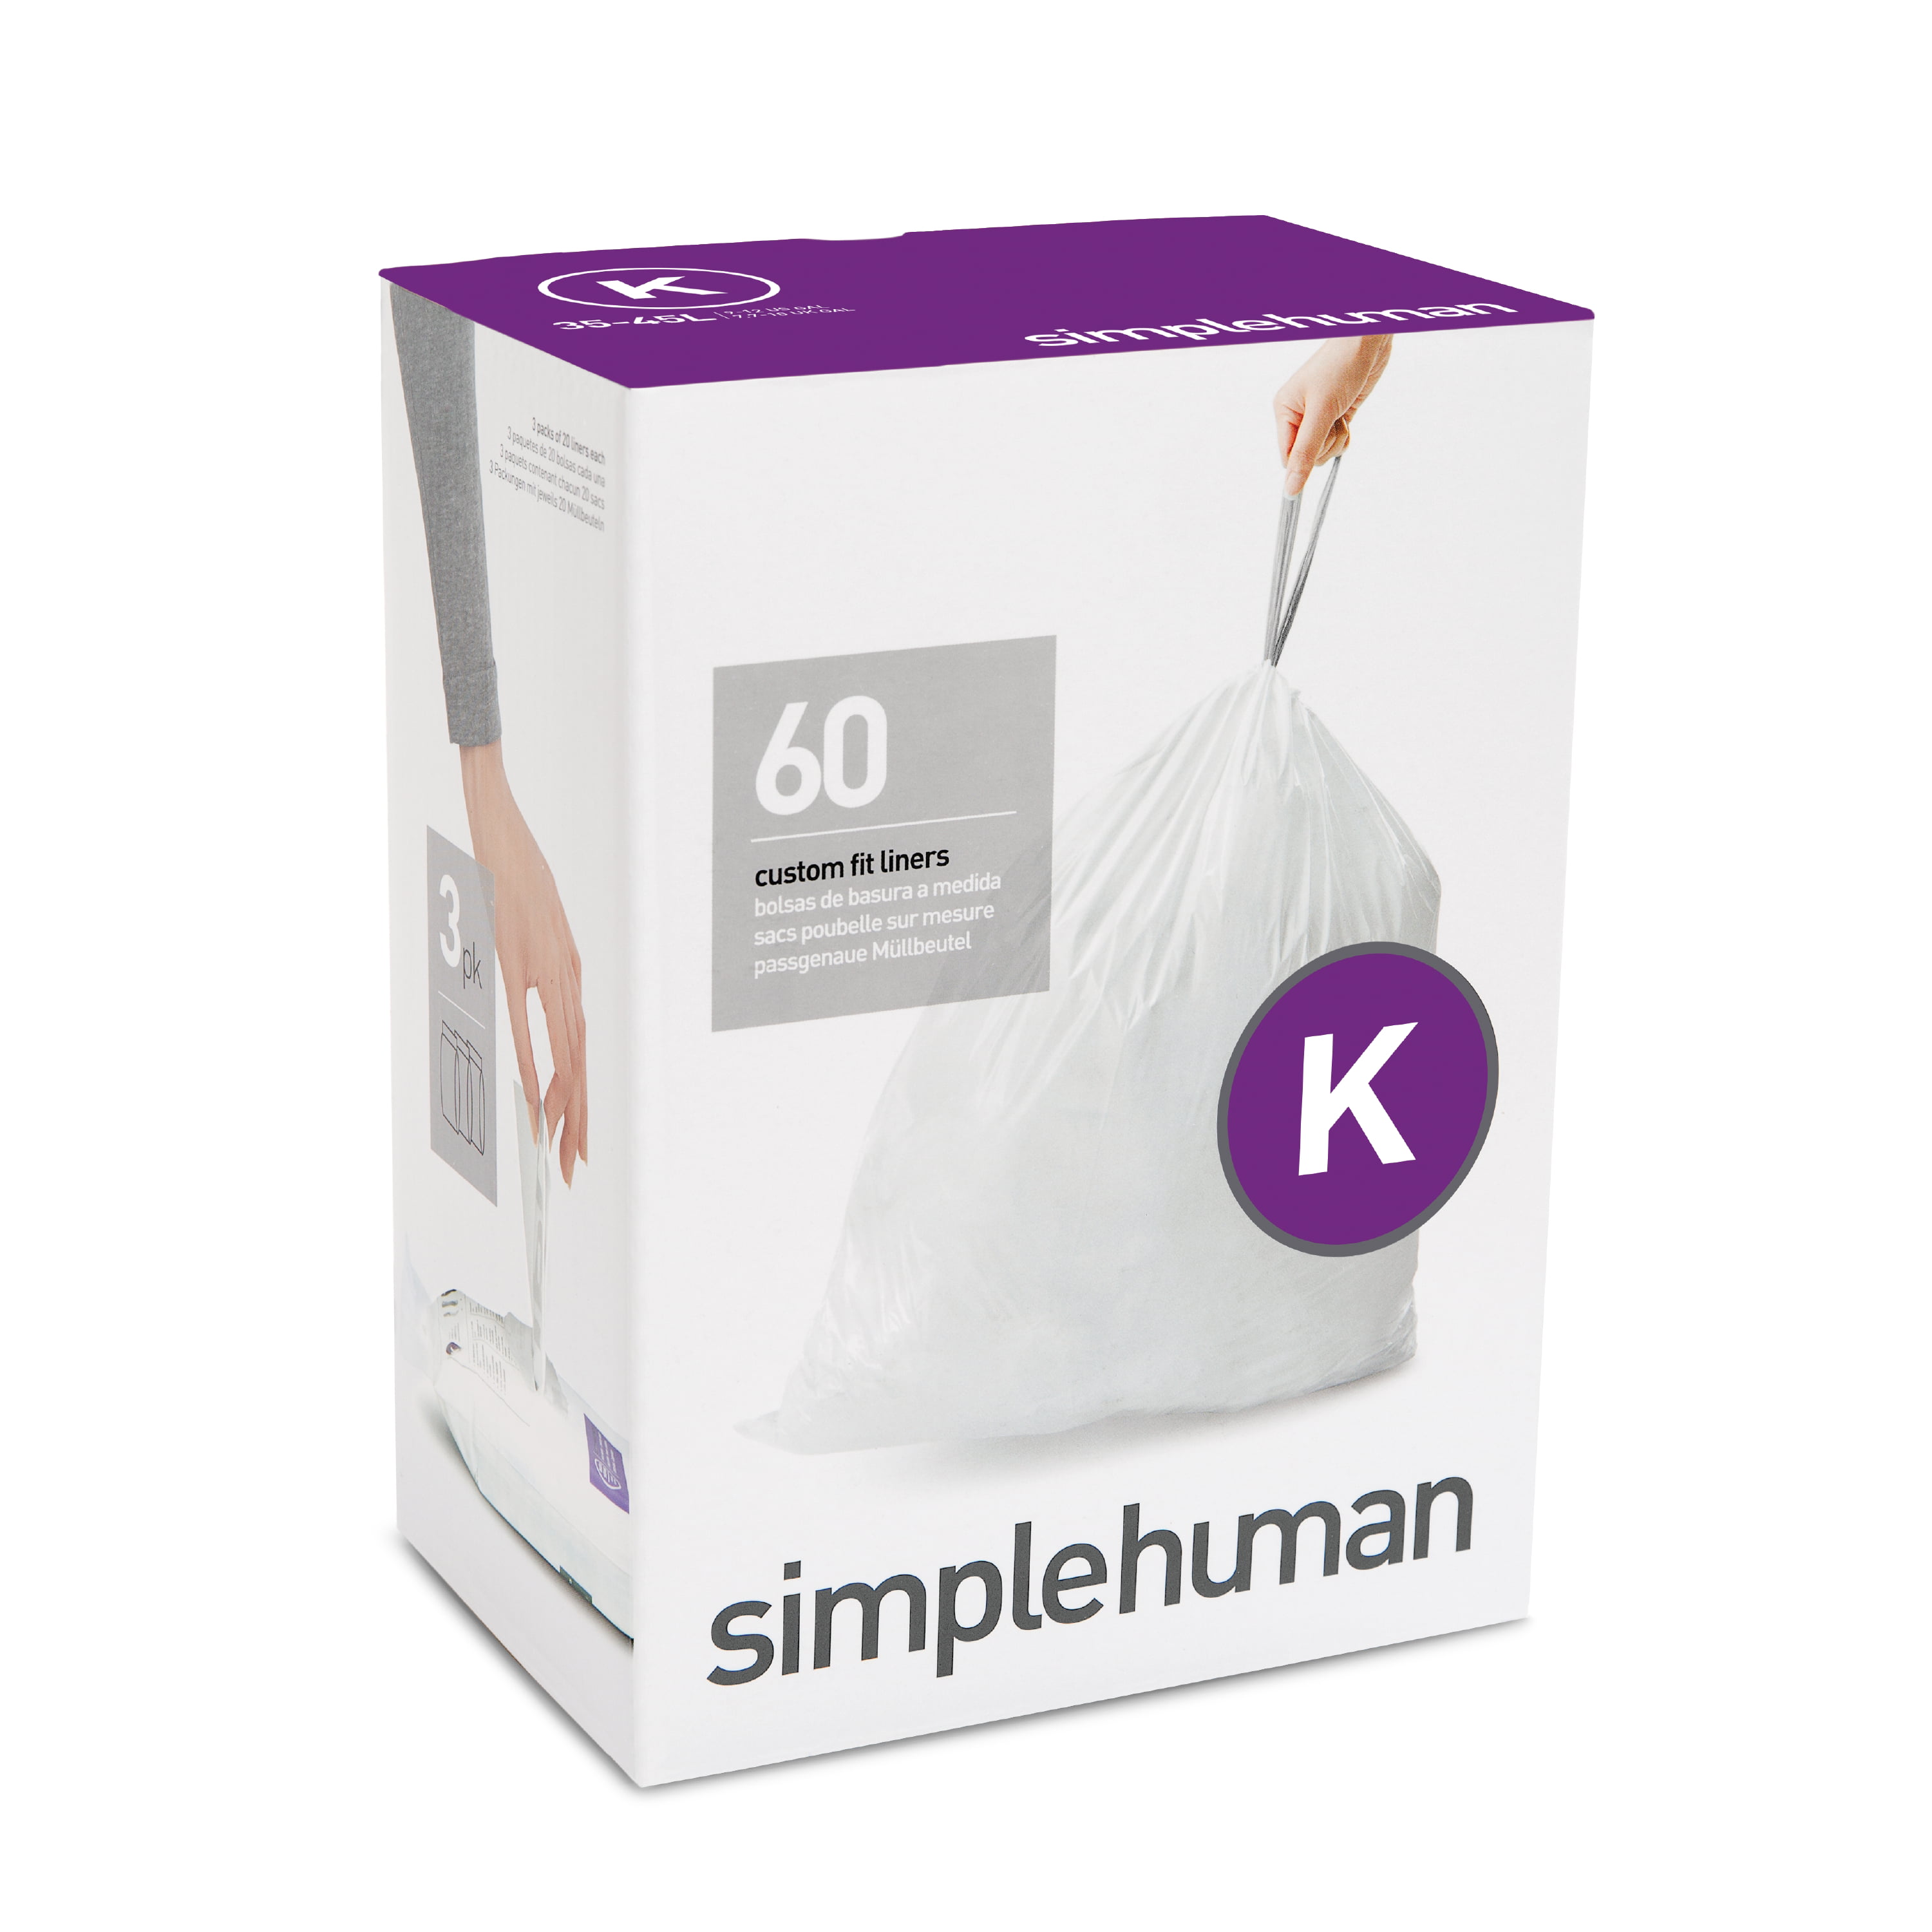 Simplehuman® Code K 20-Pack 35-45 Liter Custom Fit Liners Pack of 2 